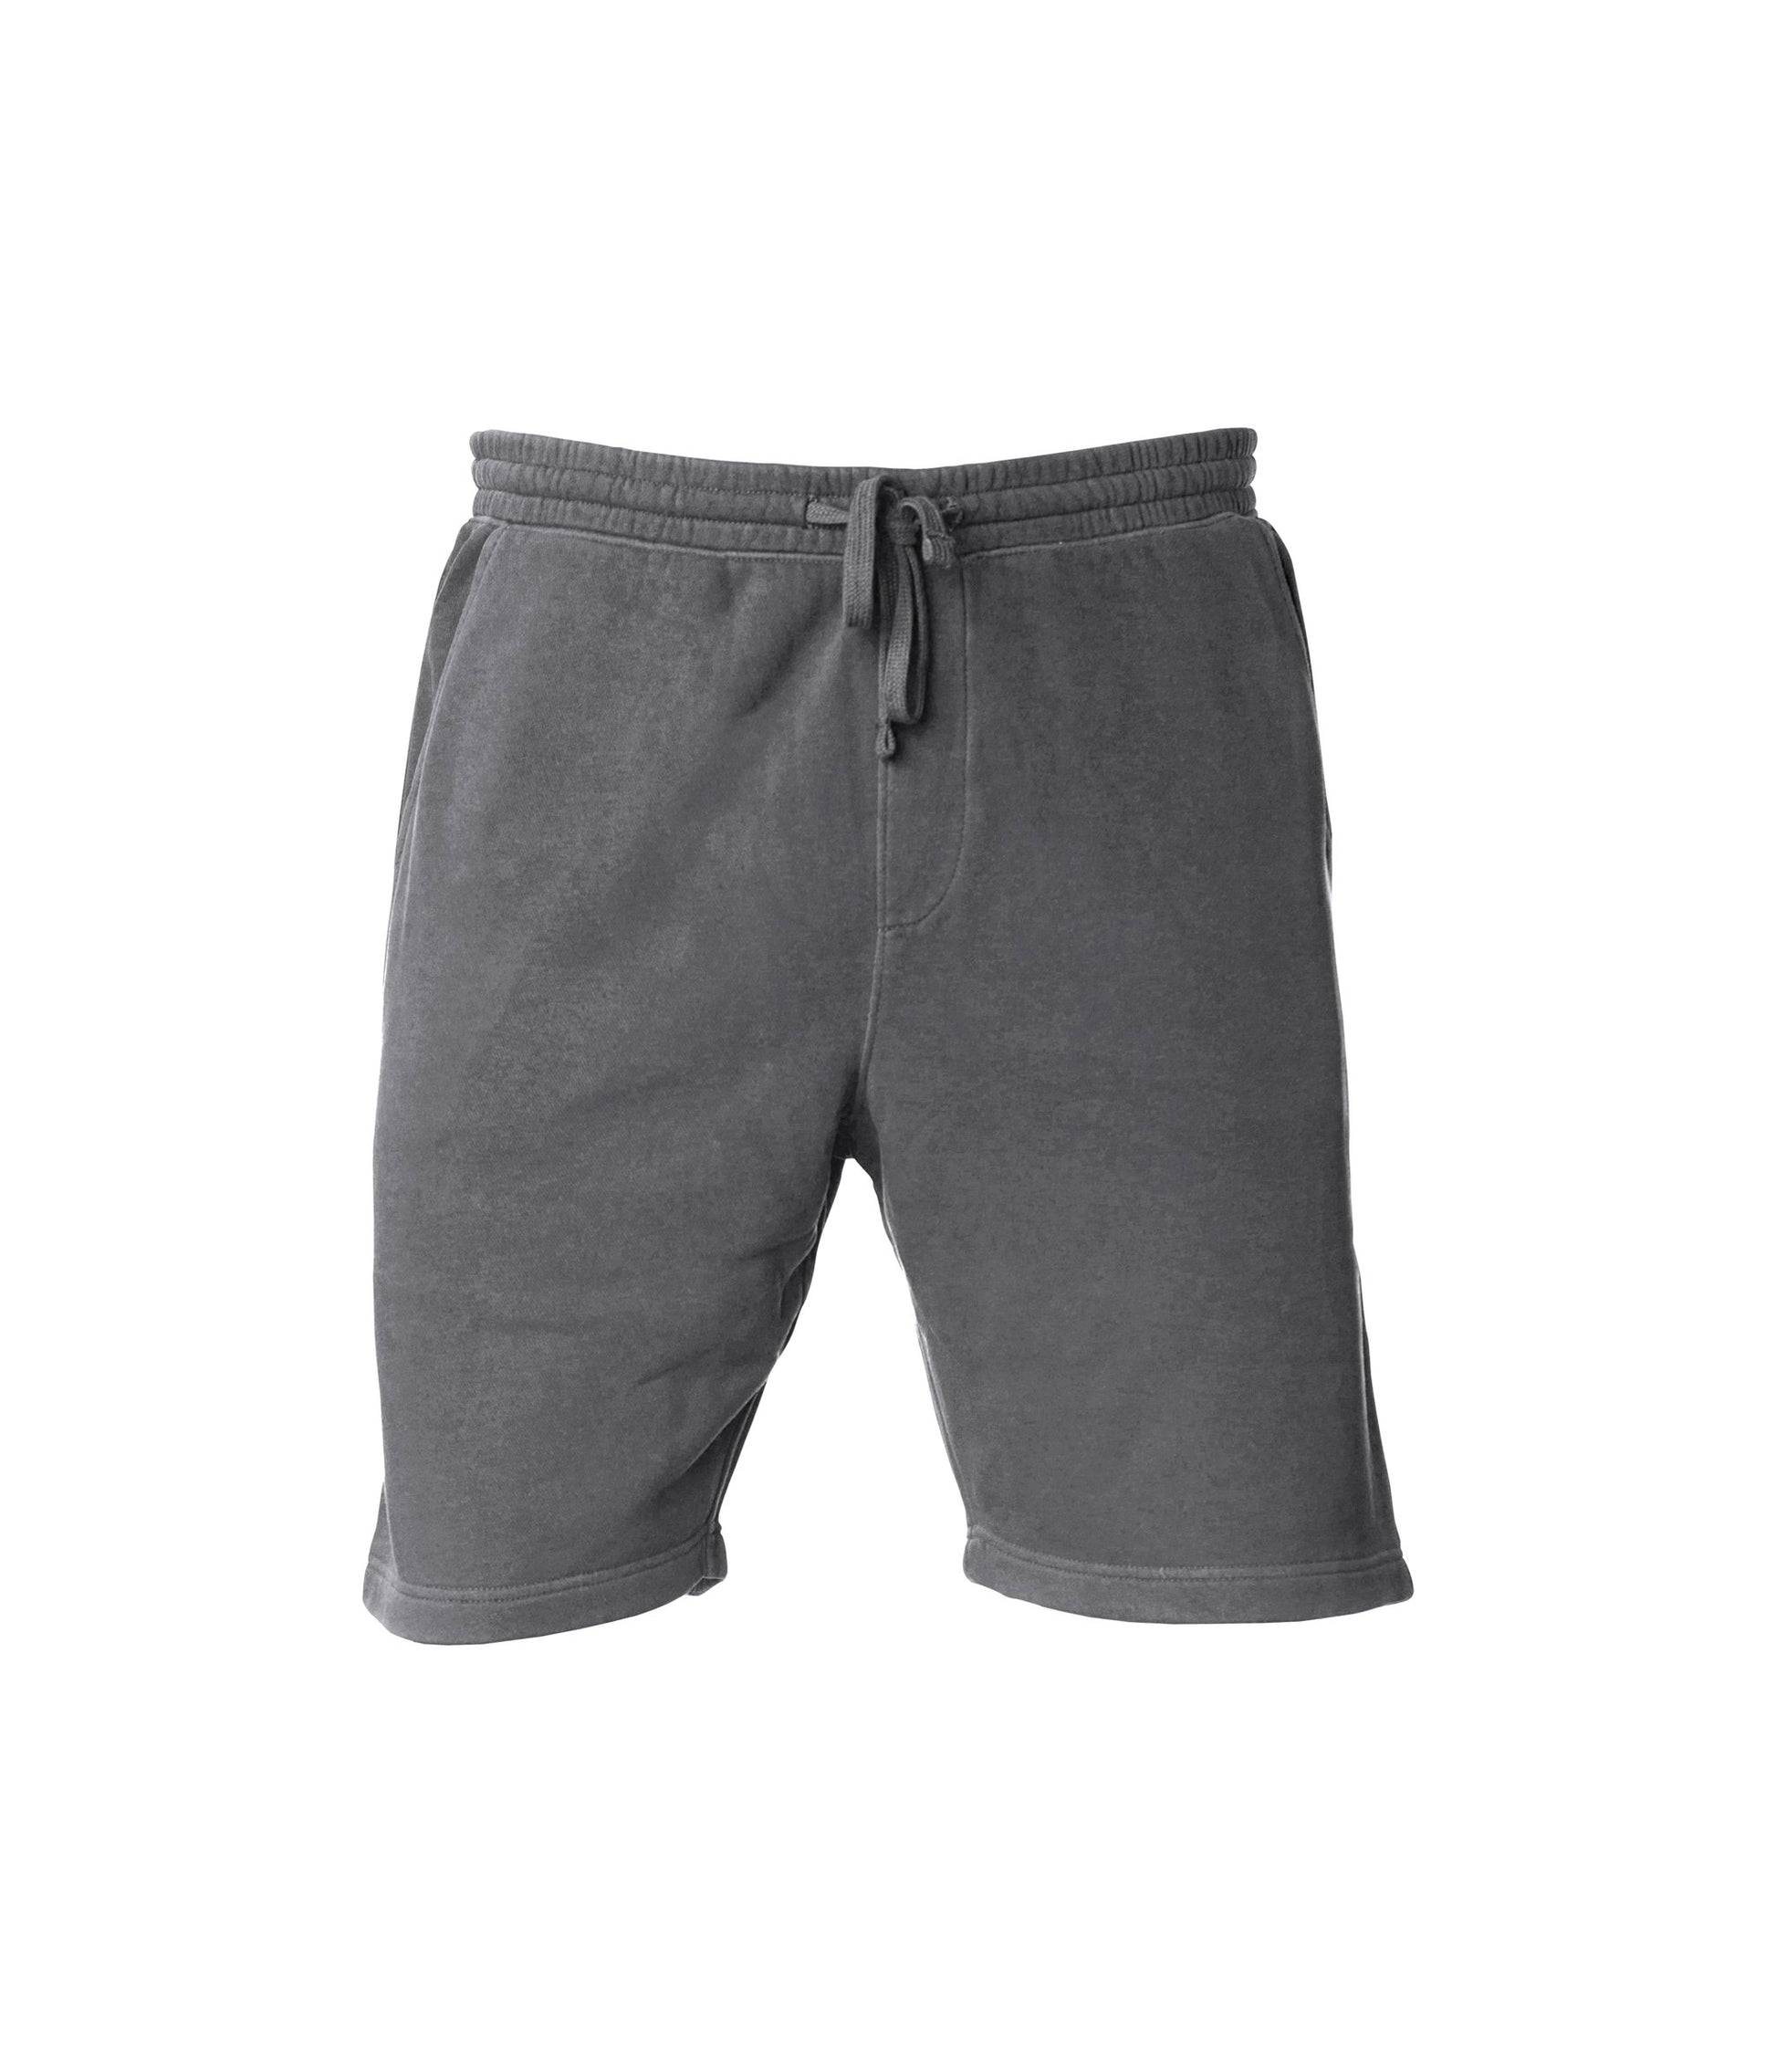 Surfworld Sweat shorts - Charcoal Black Mens Shorts